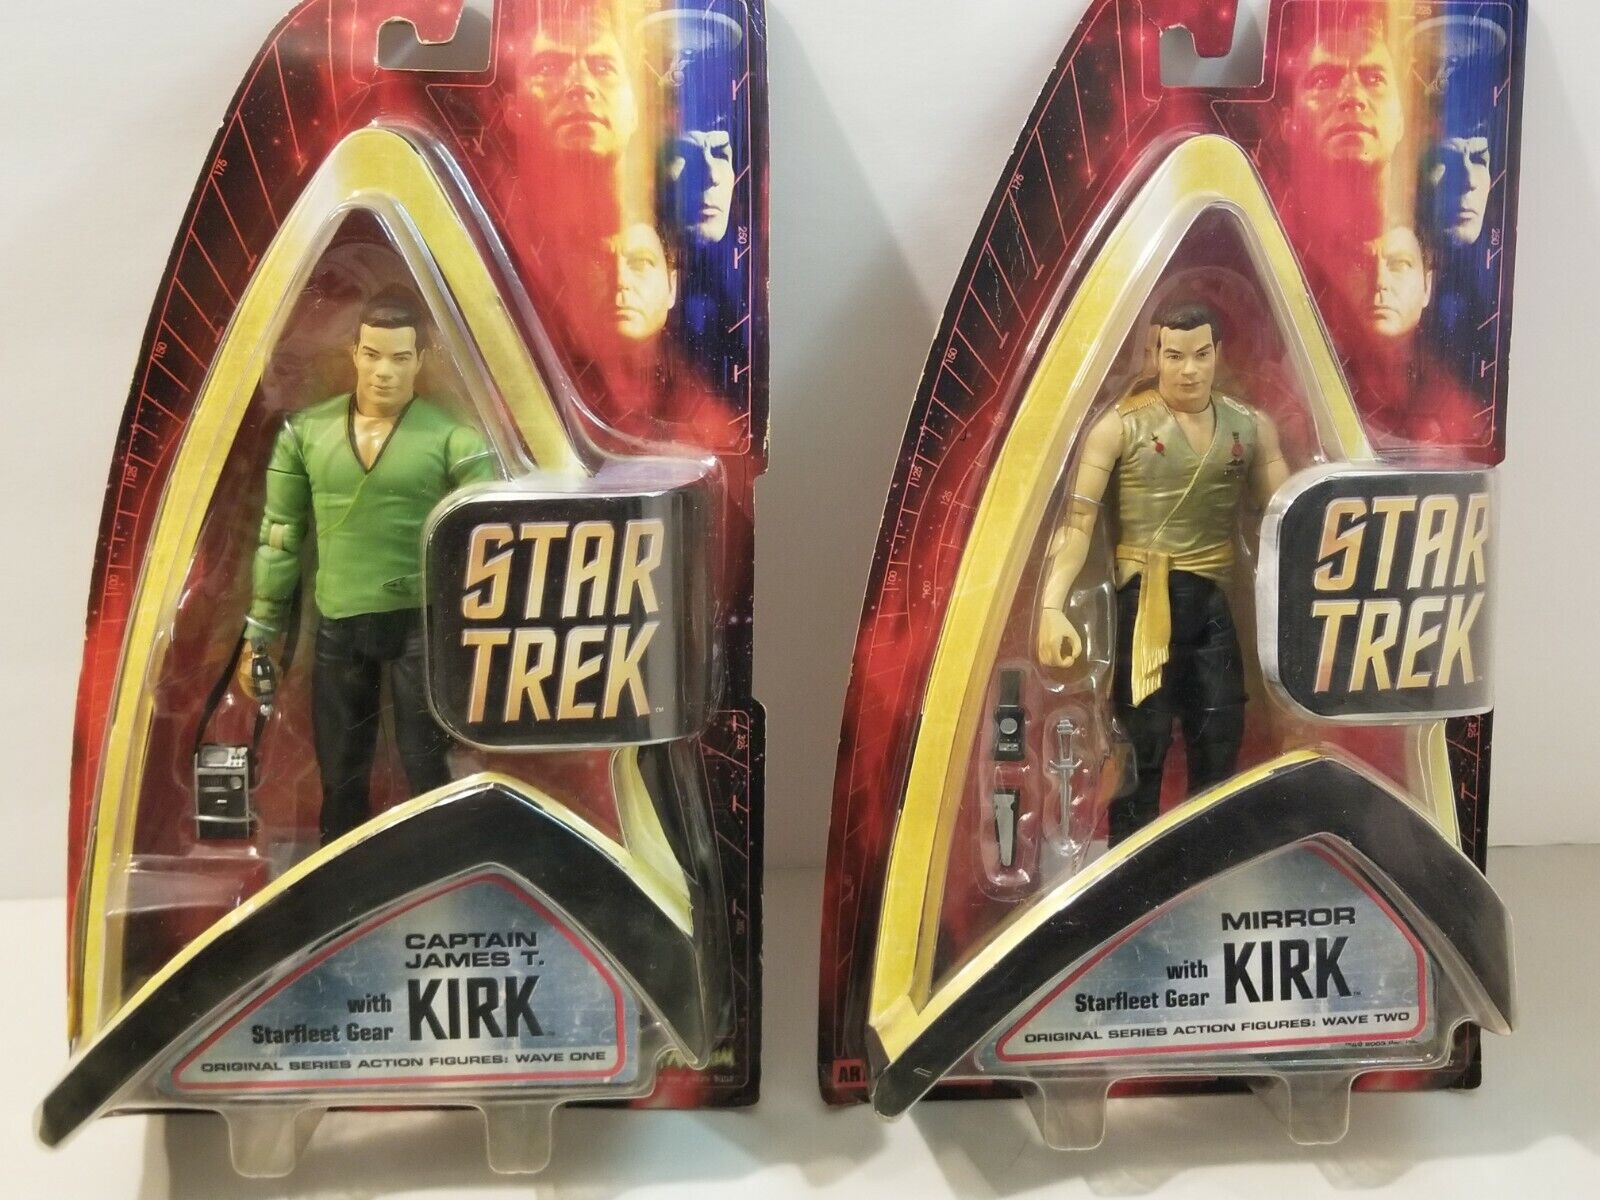 Mirror Kirk - Captain James T Kirk Art Asylum Original Series 2003 NIB Star Trek